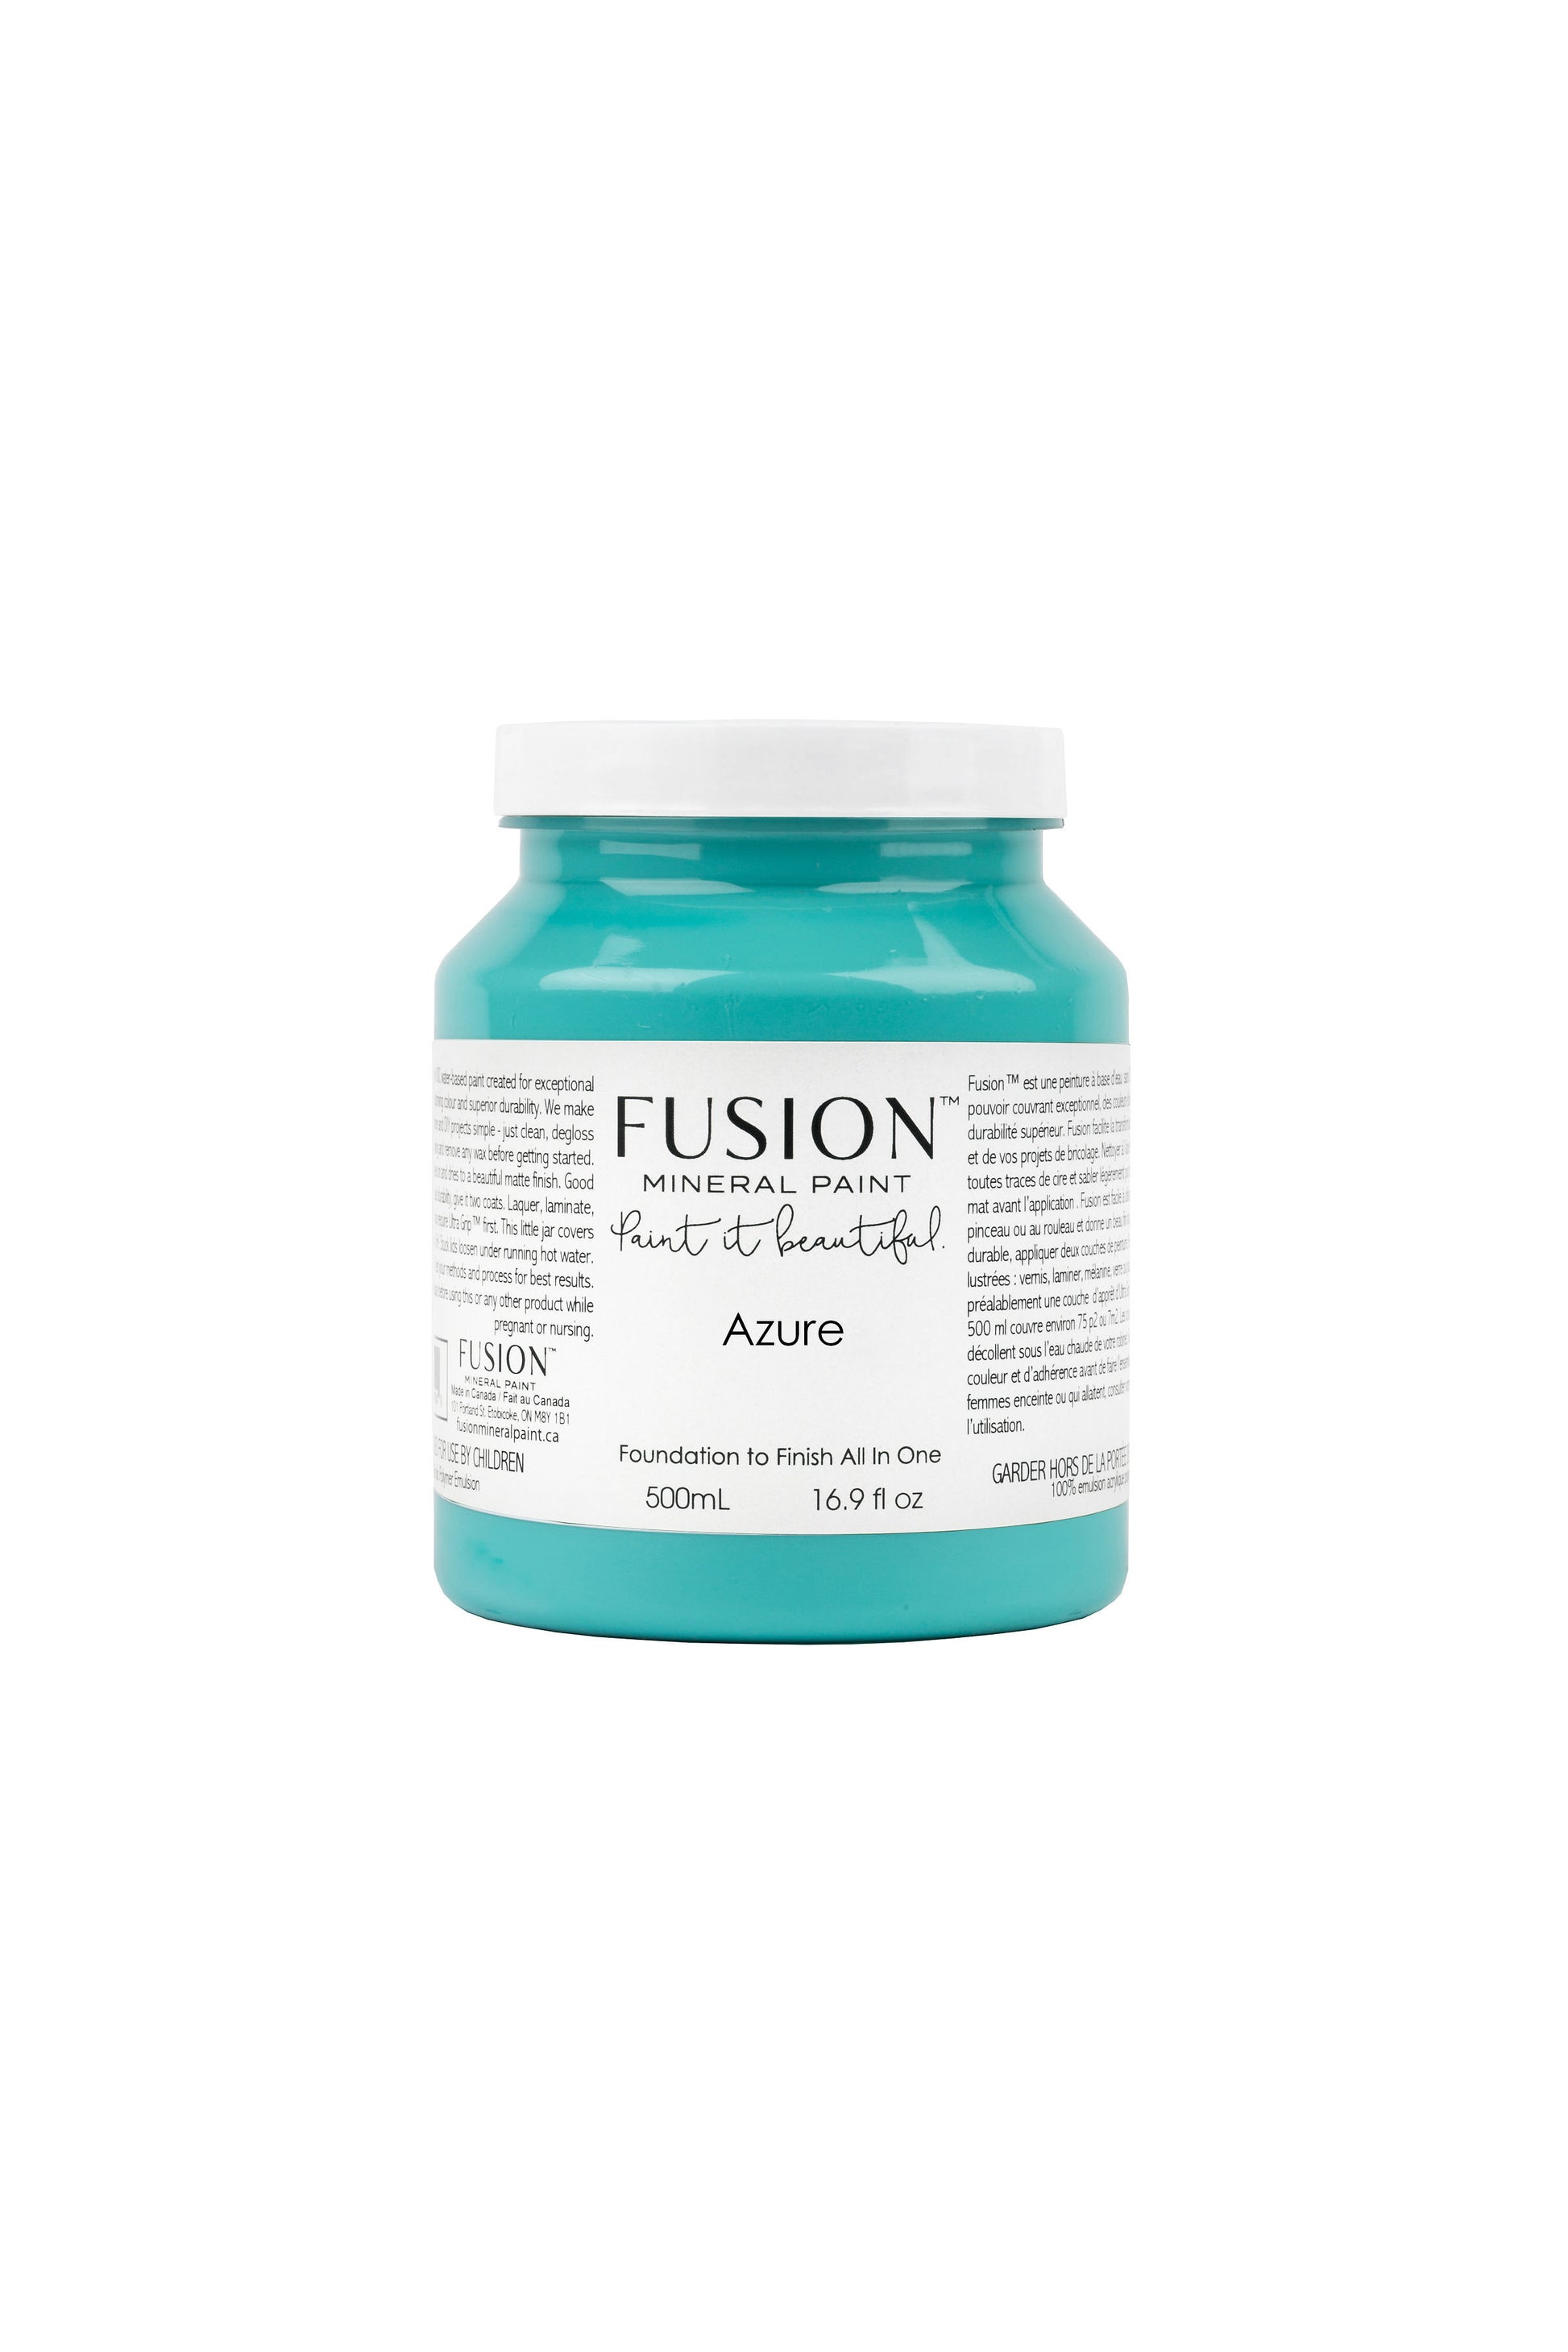 Azure Fusion Mineral Paint, Turquoise Paint Color| 500ml Pint Size